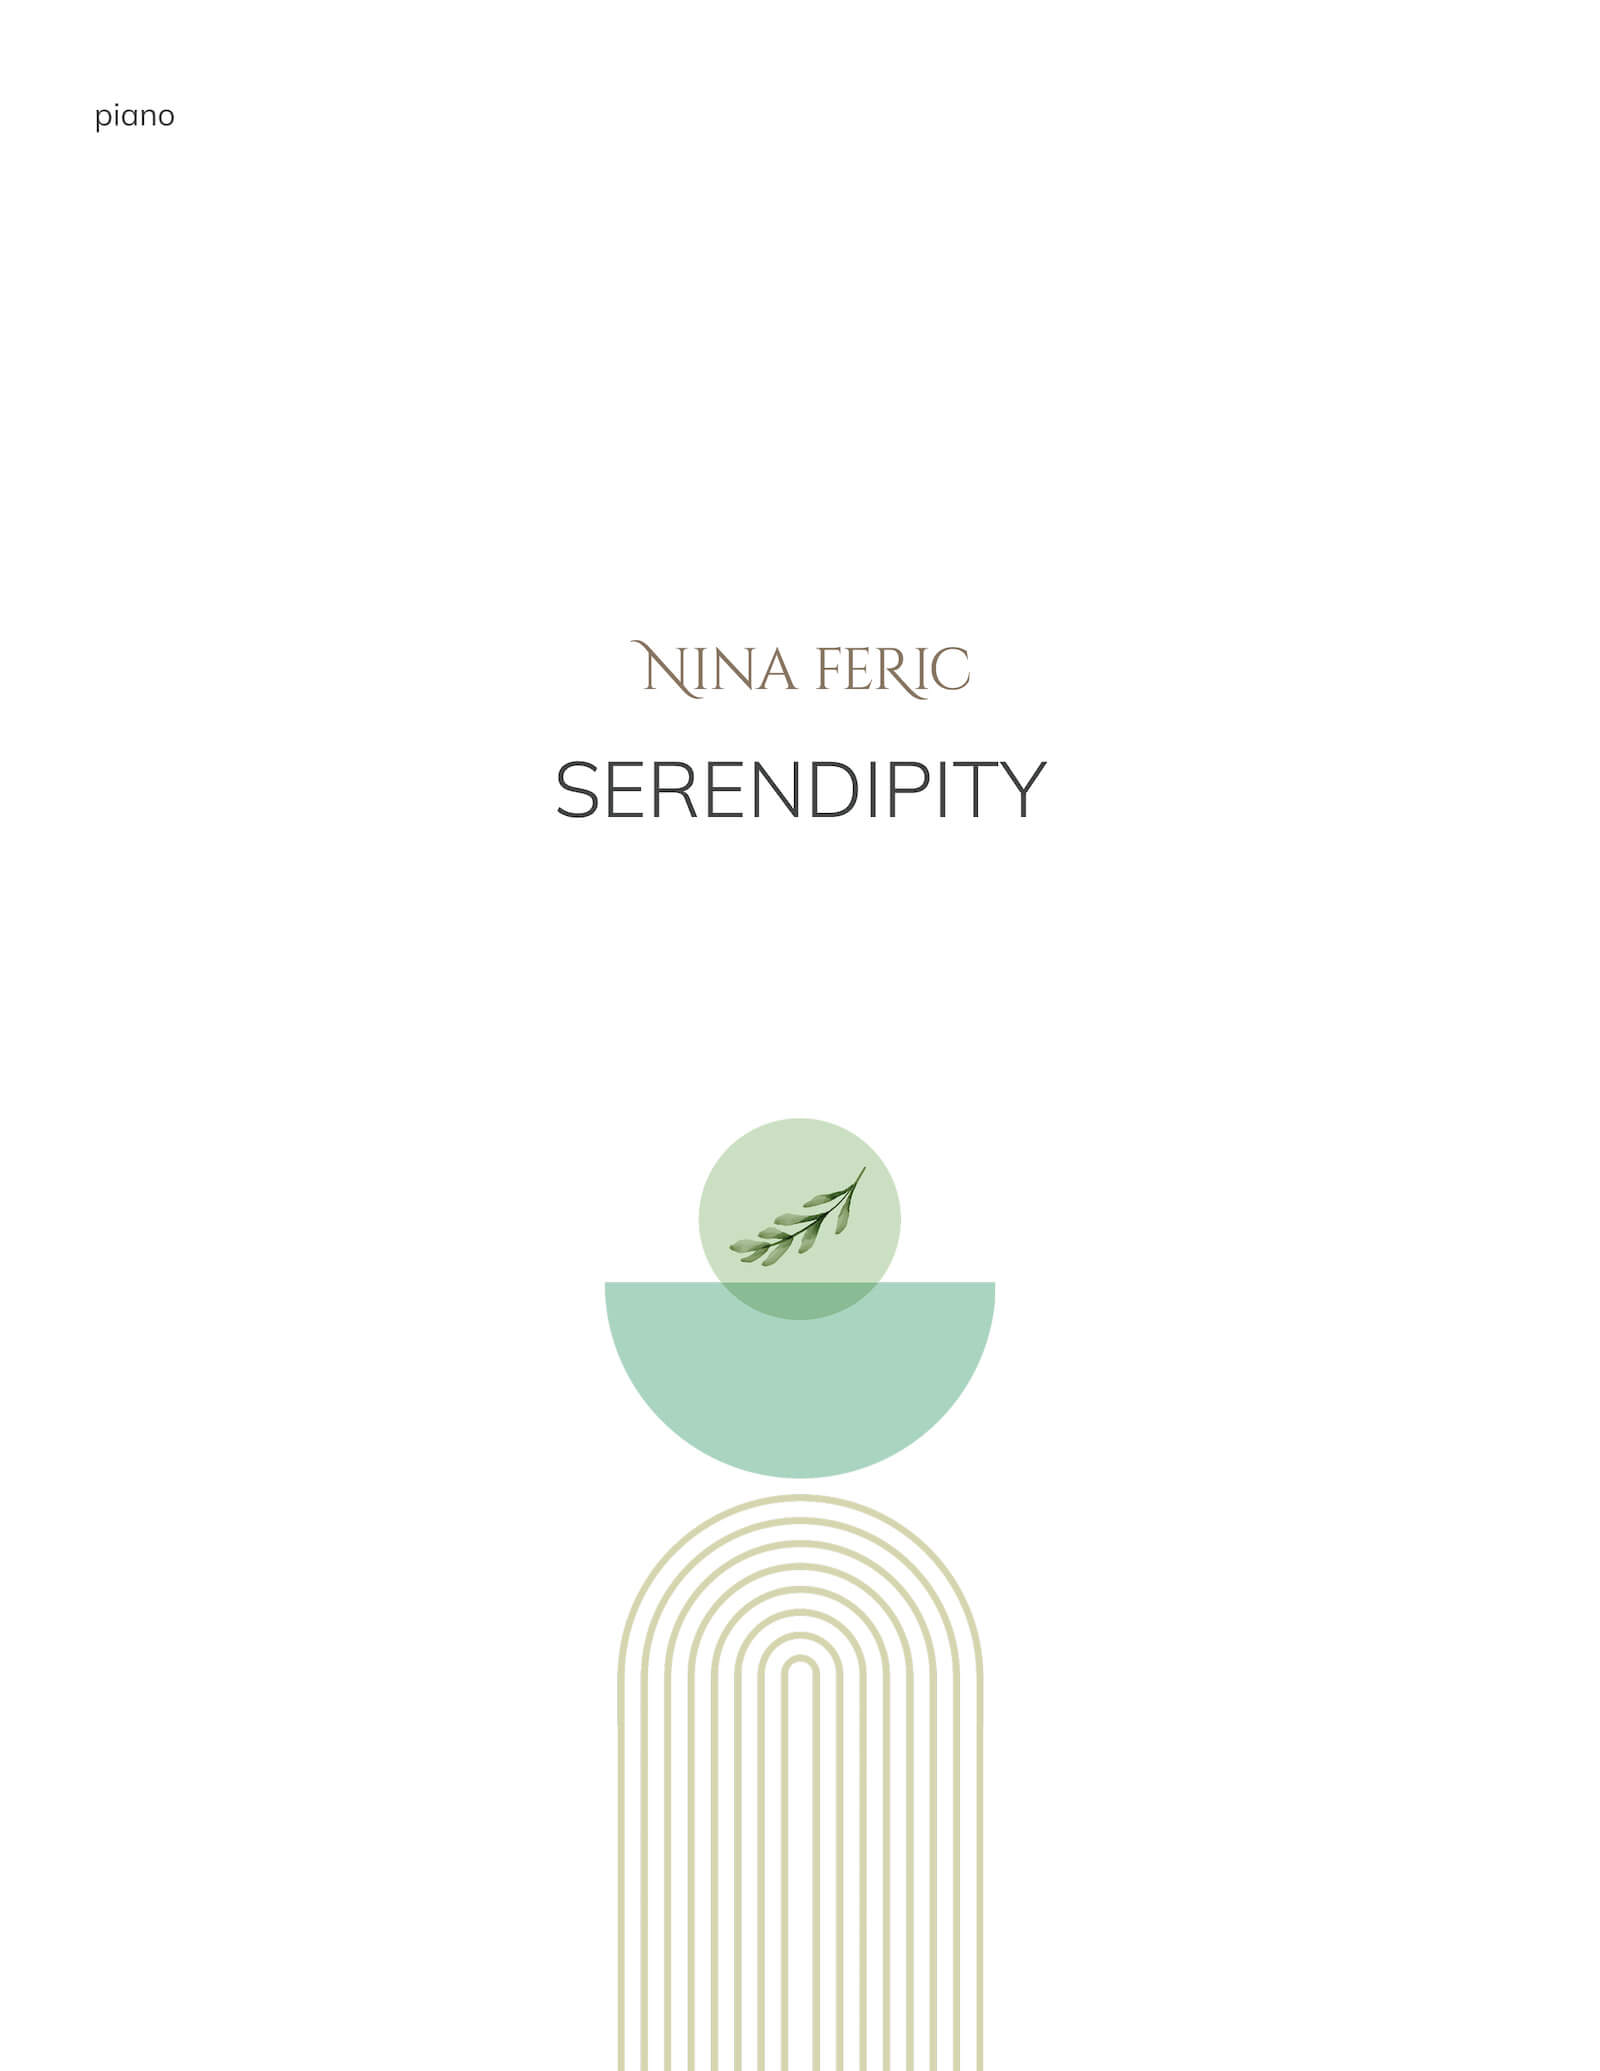 Serendipity - score cover